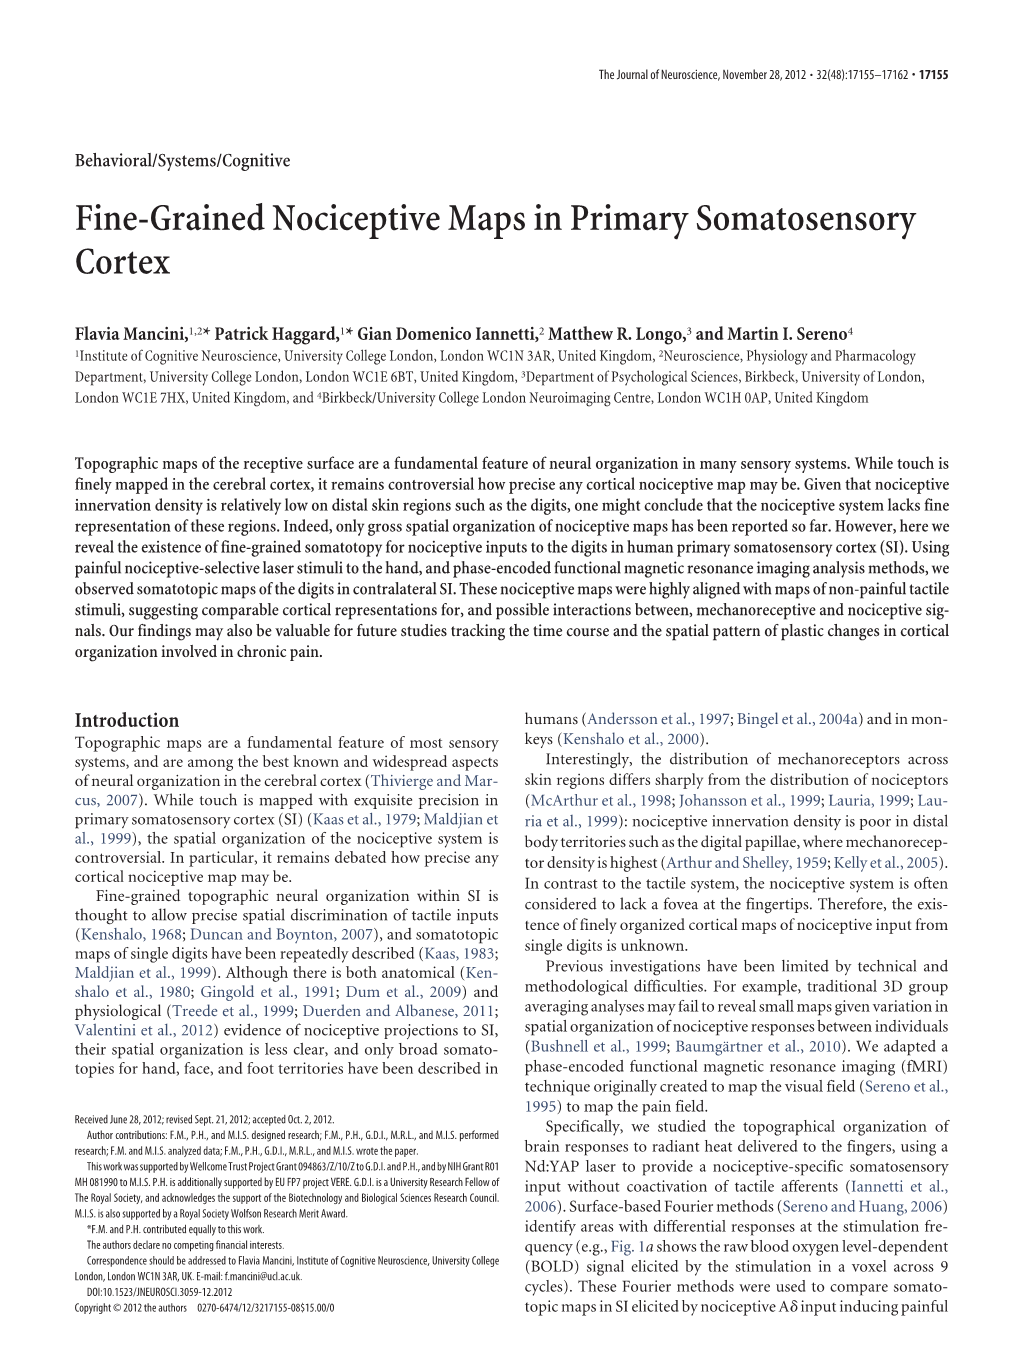 Fine-Grained Nociceptive Maps in Primary Somatosensory Cortex